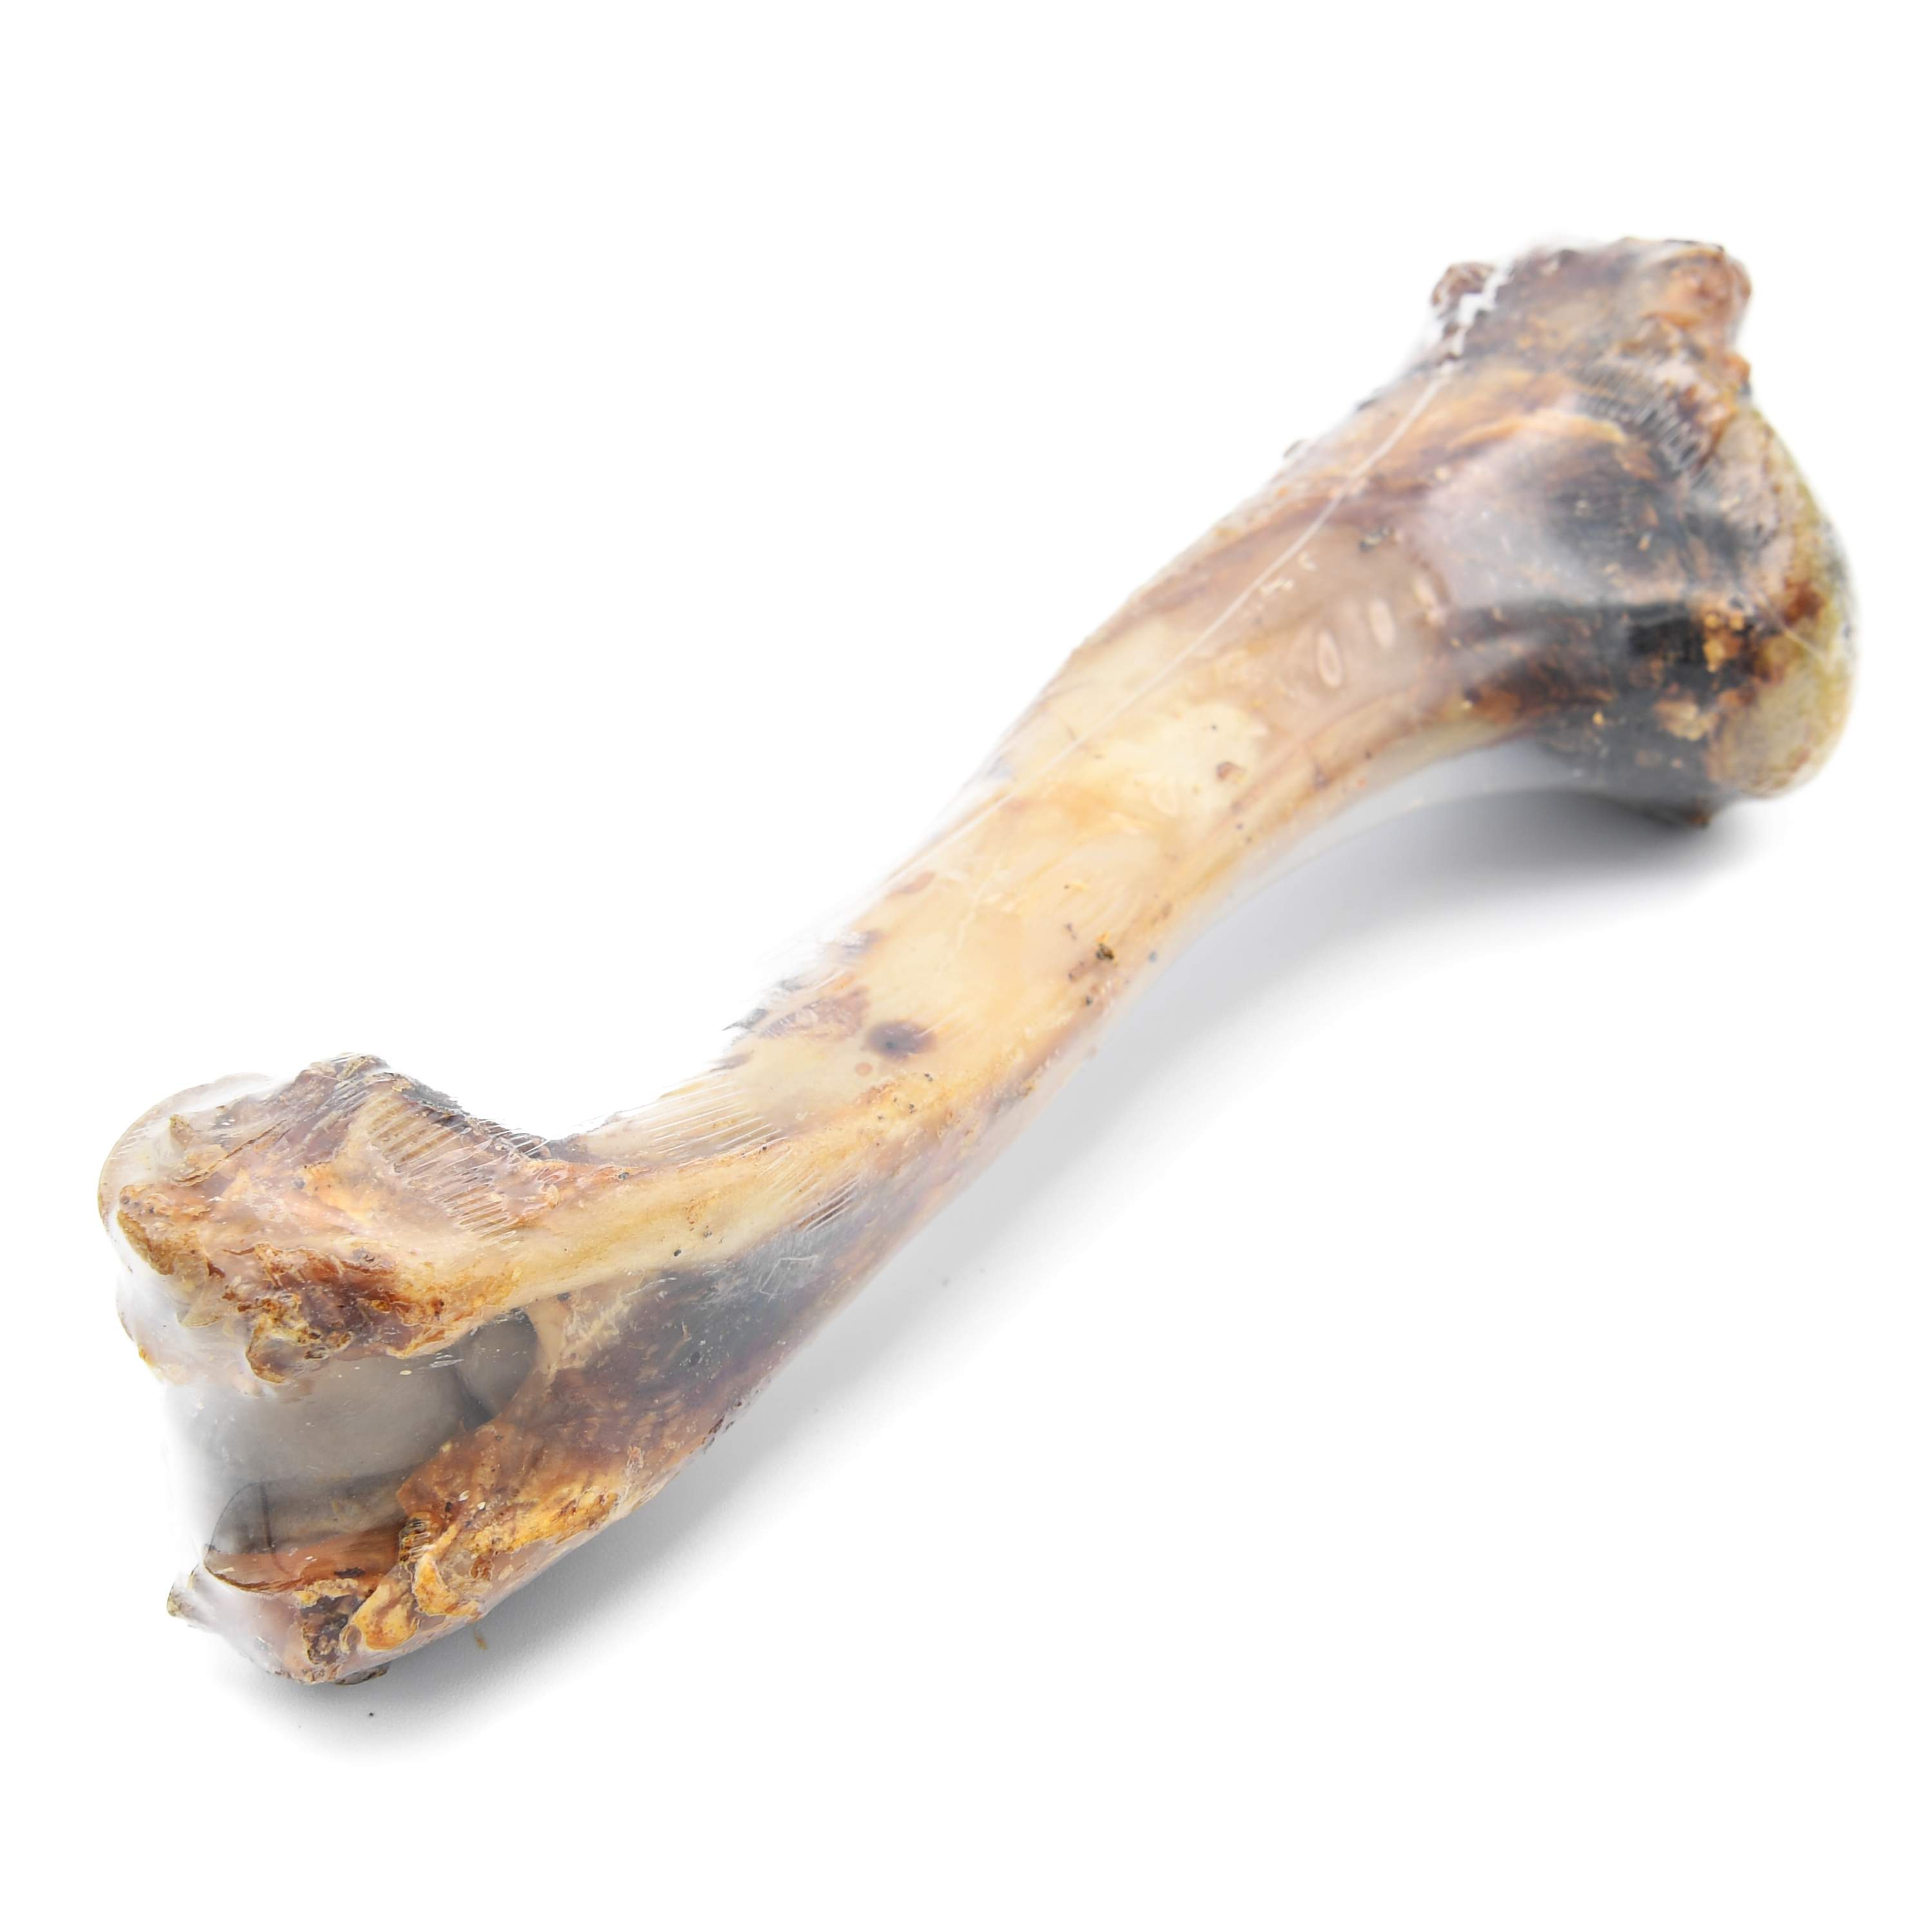 Venison Bone - Small, Medium or Large